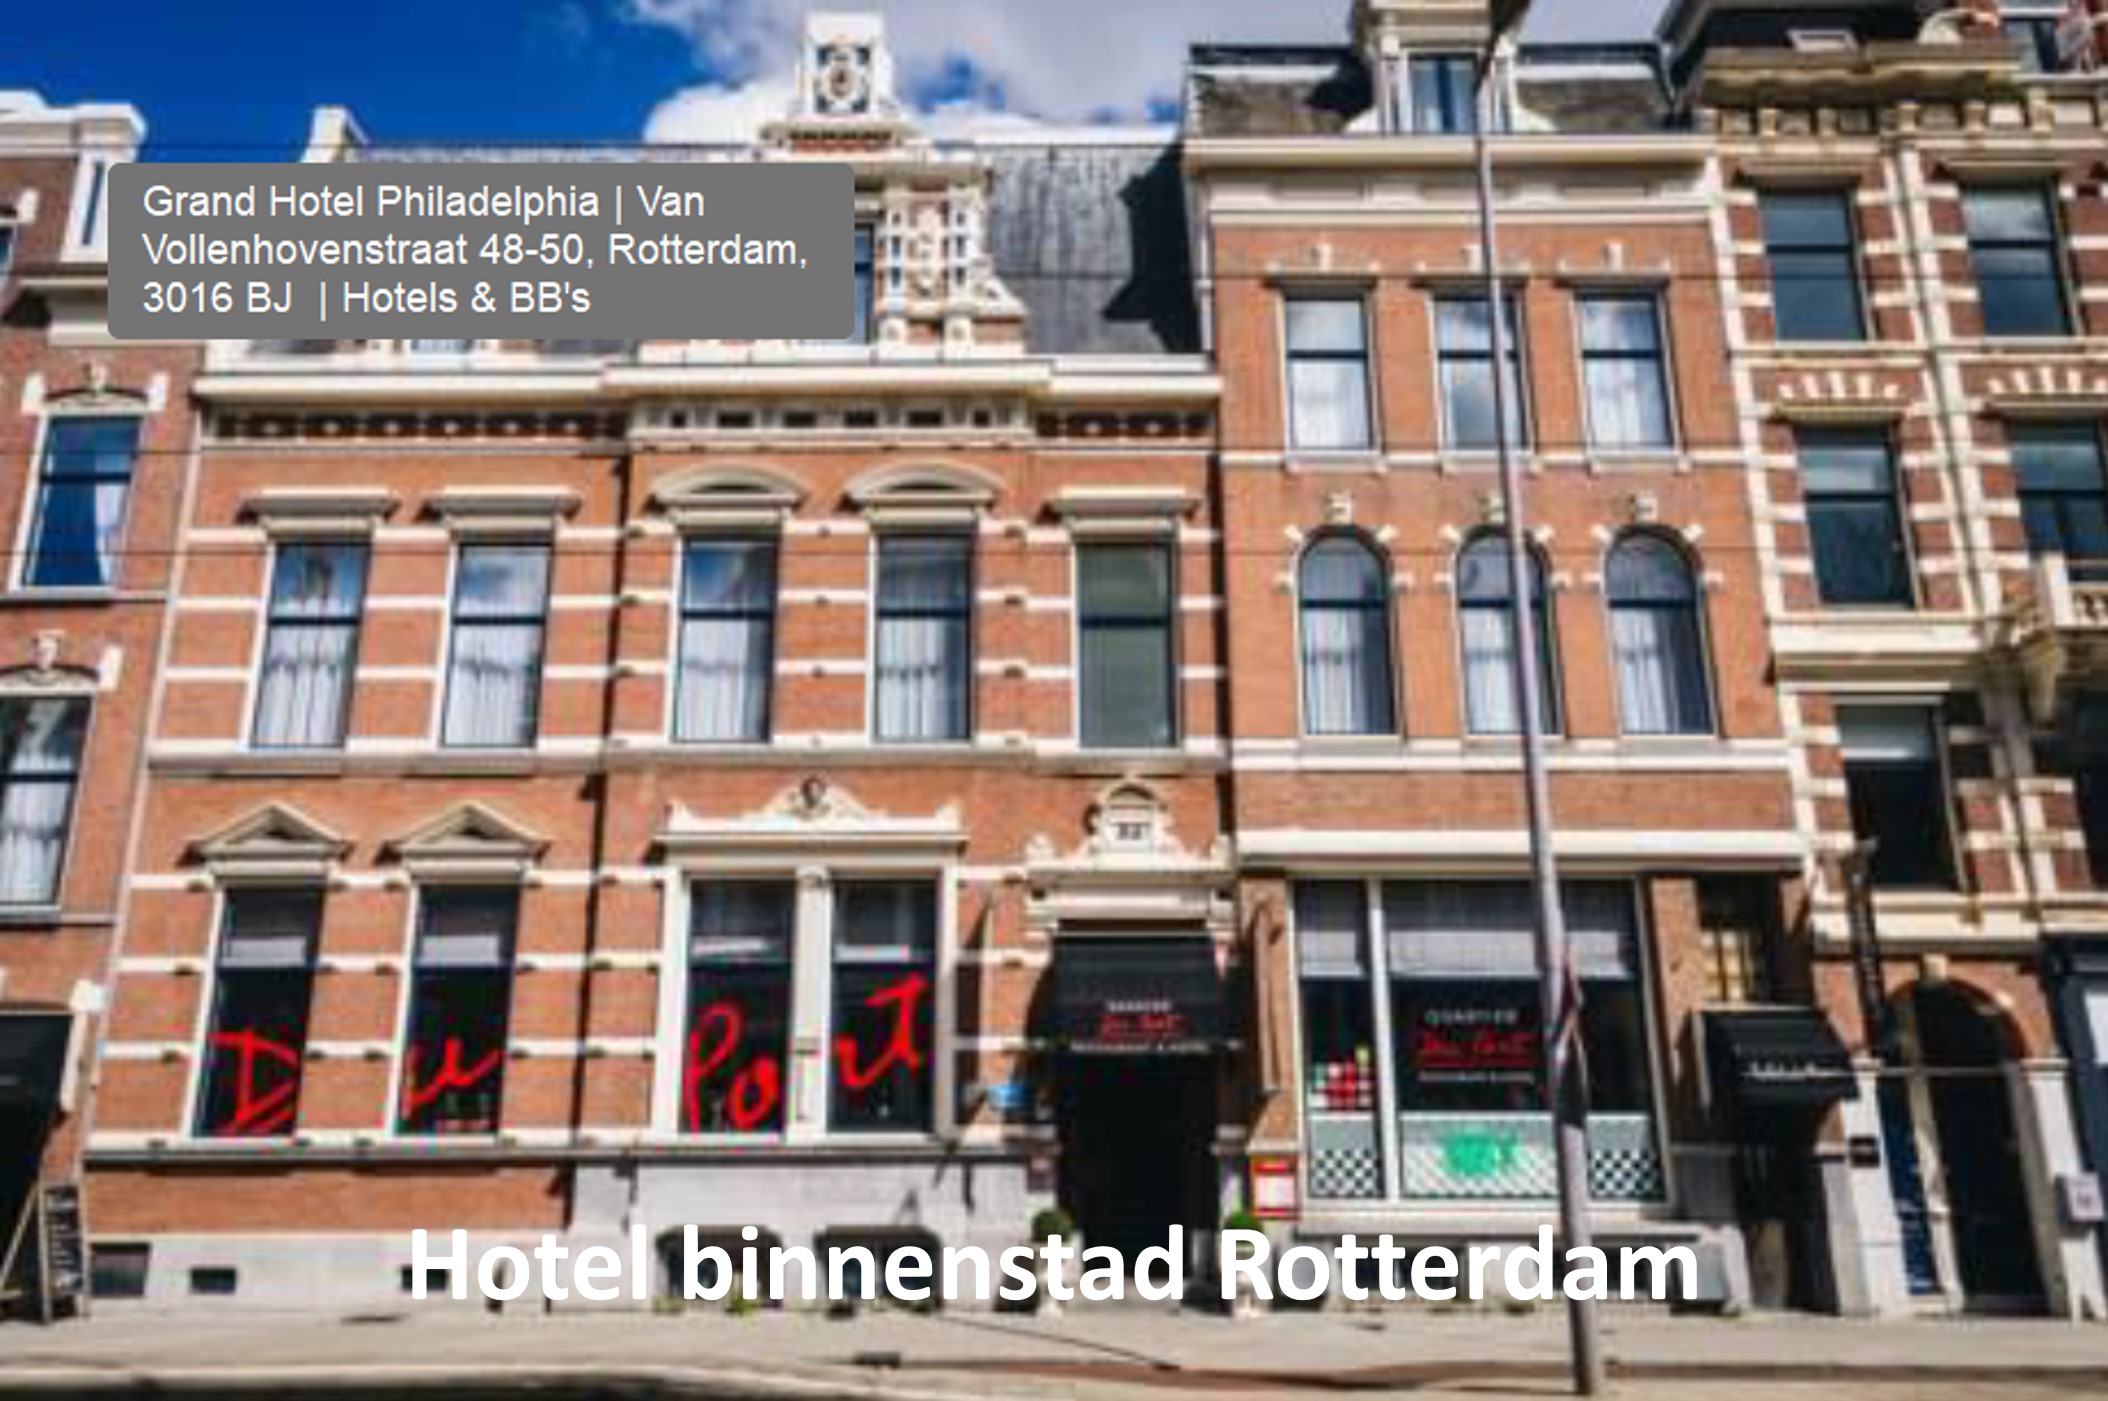 Rotterdam - hotel binnenstad